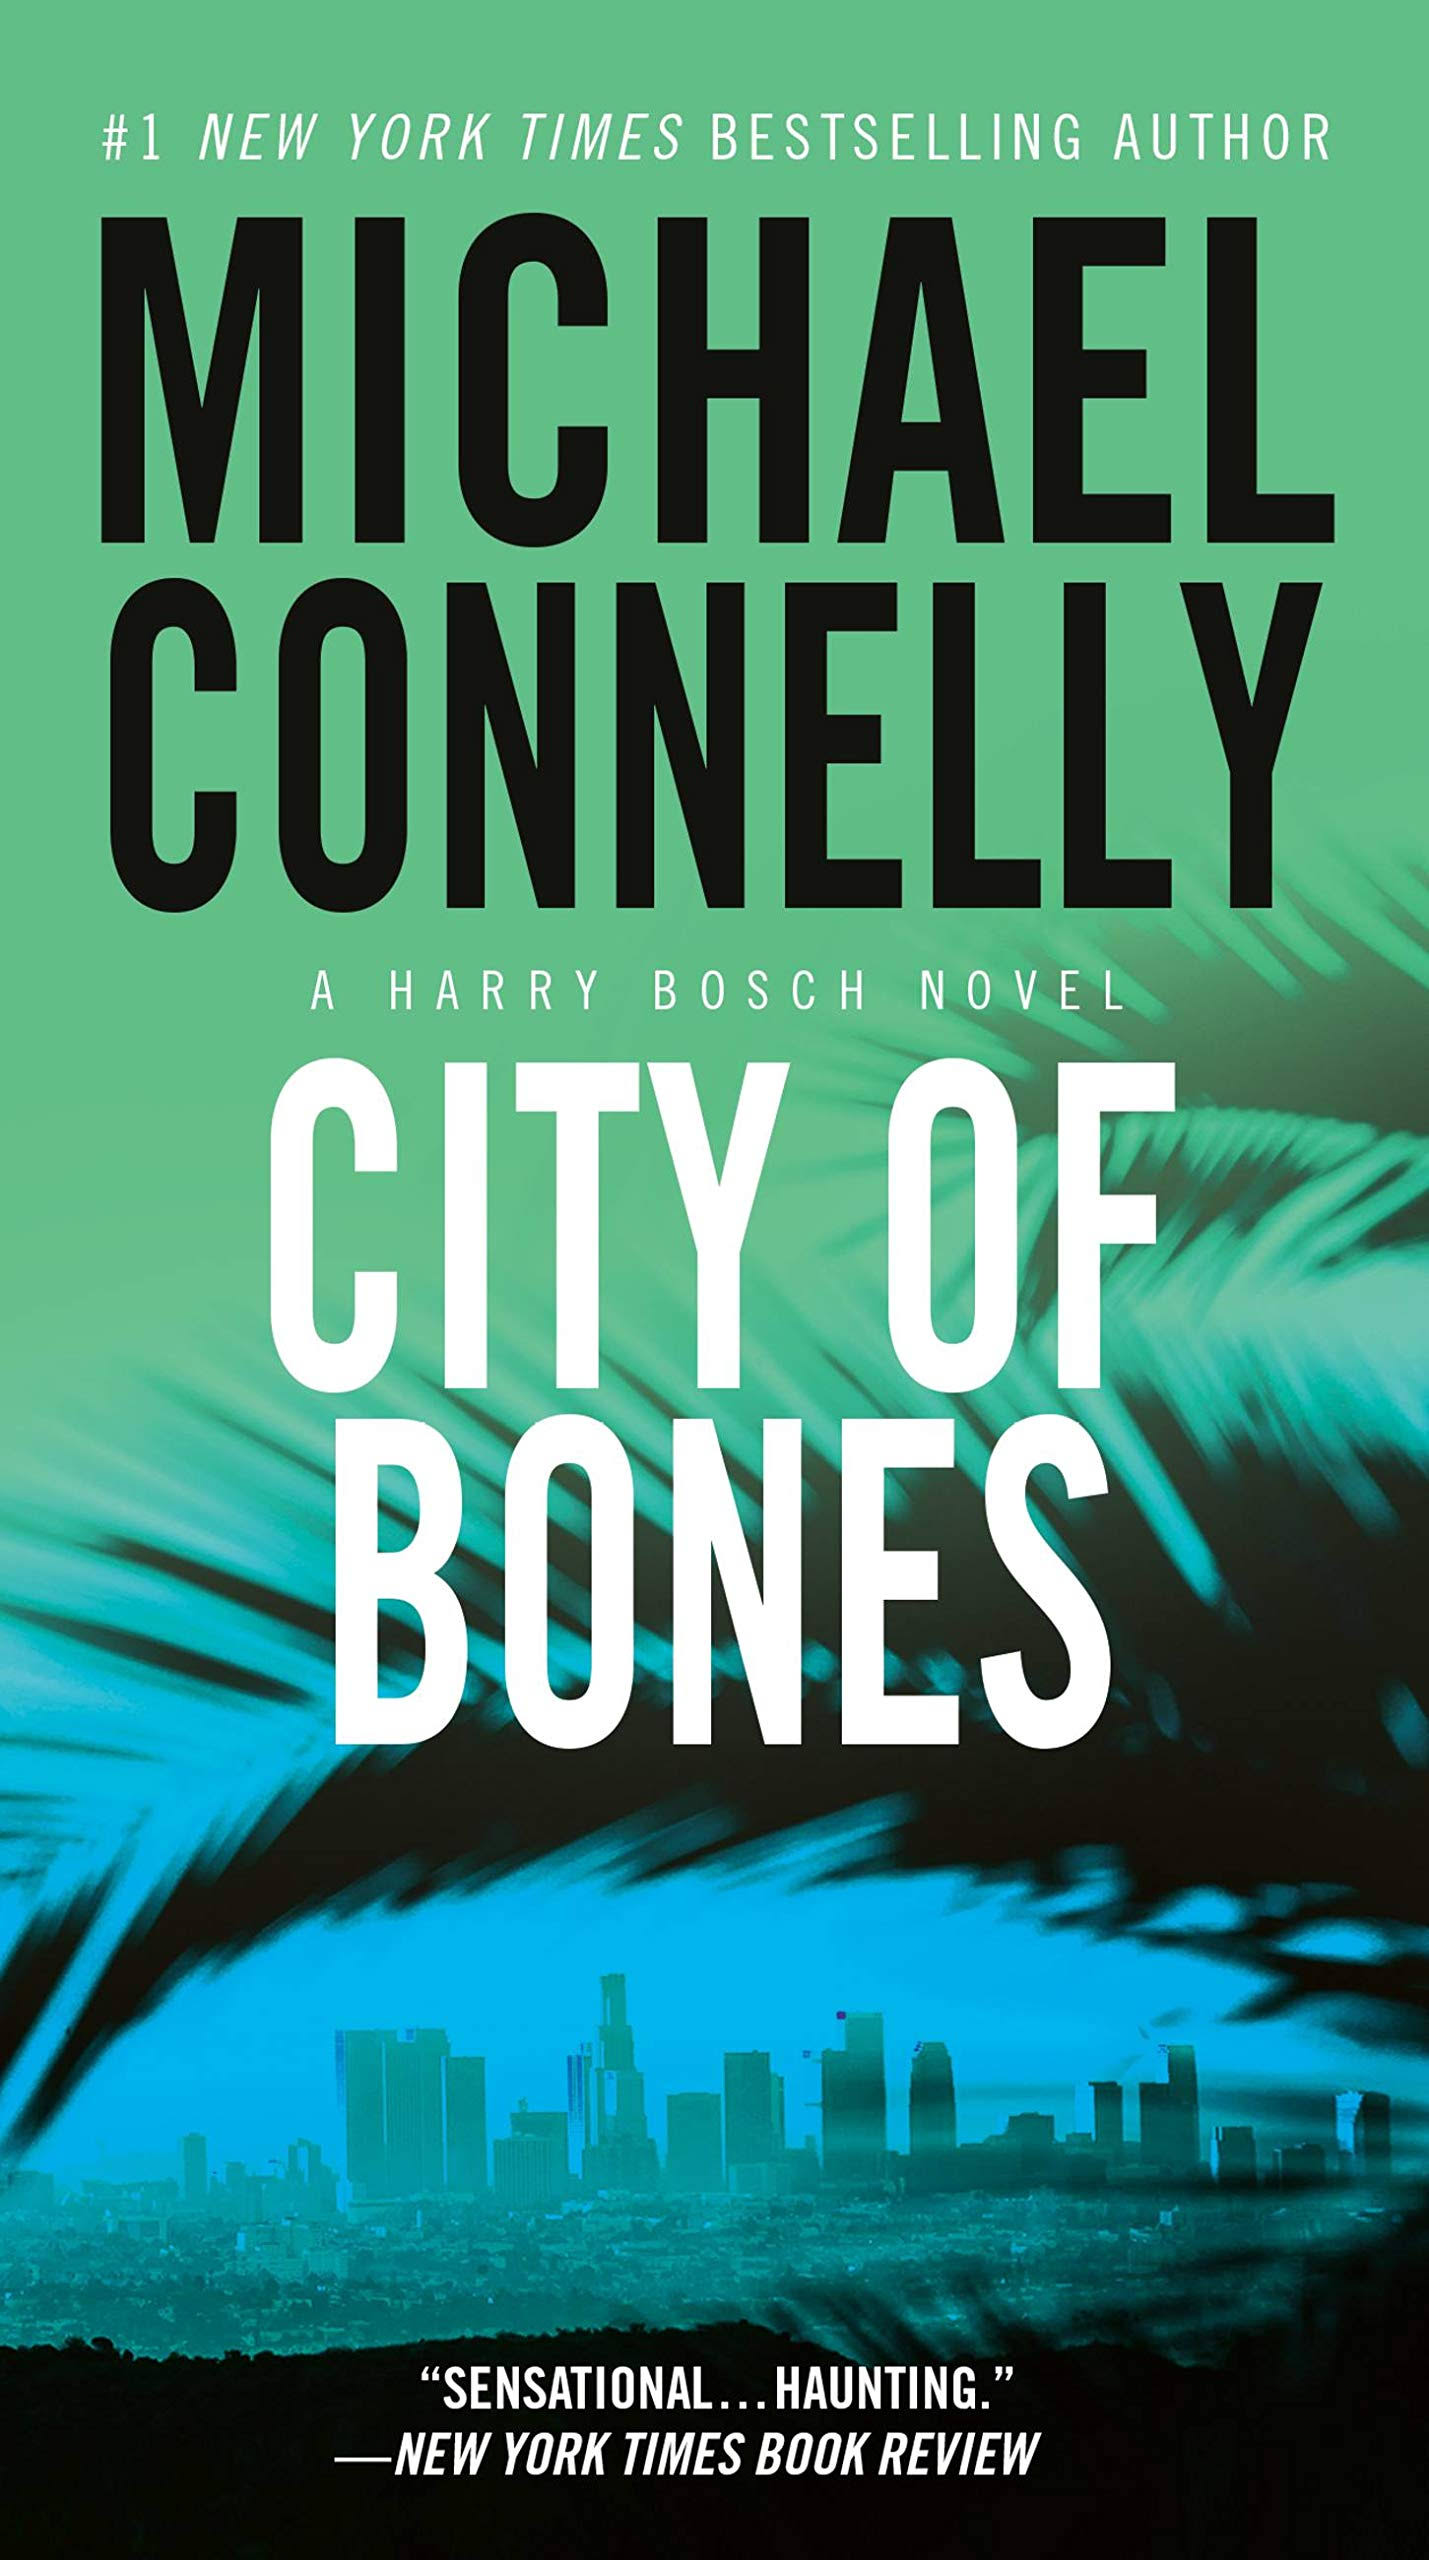 City Of Bones - Michael Connelly